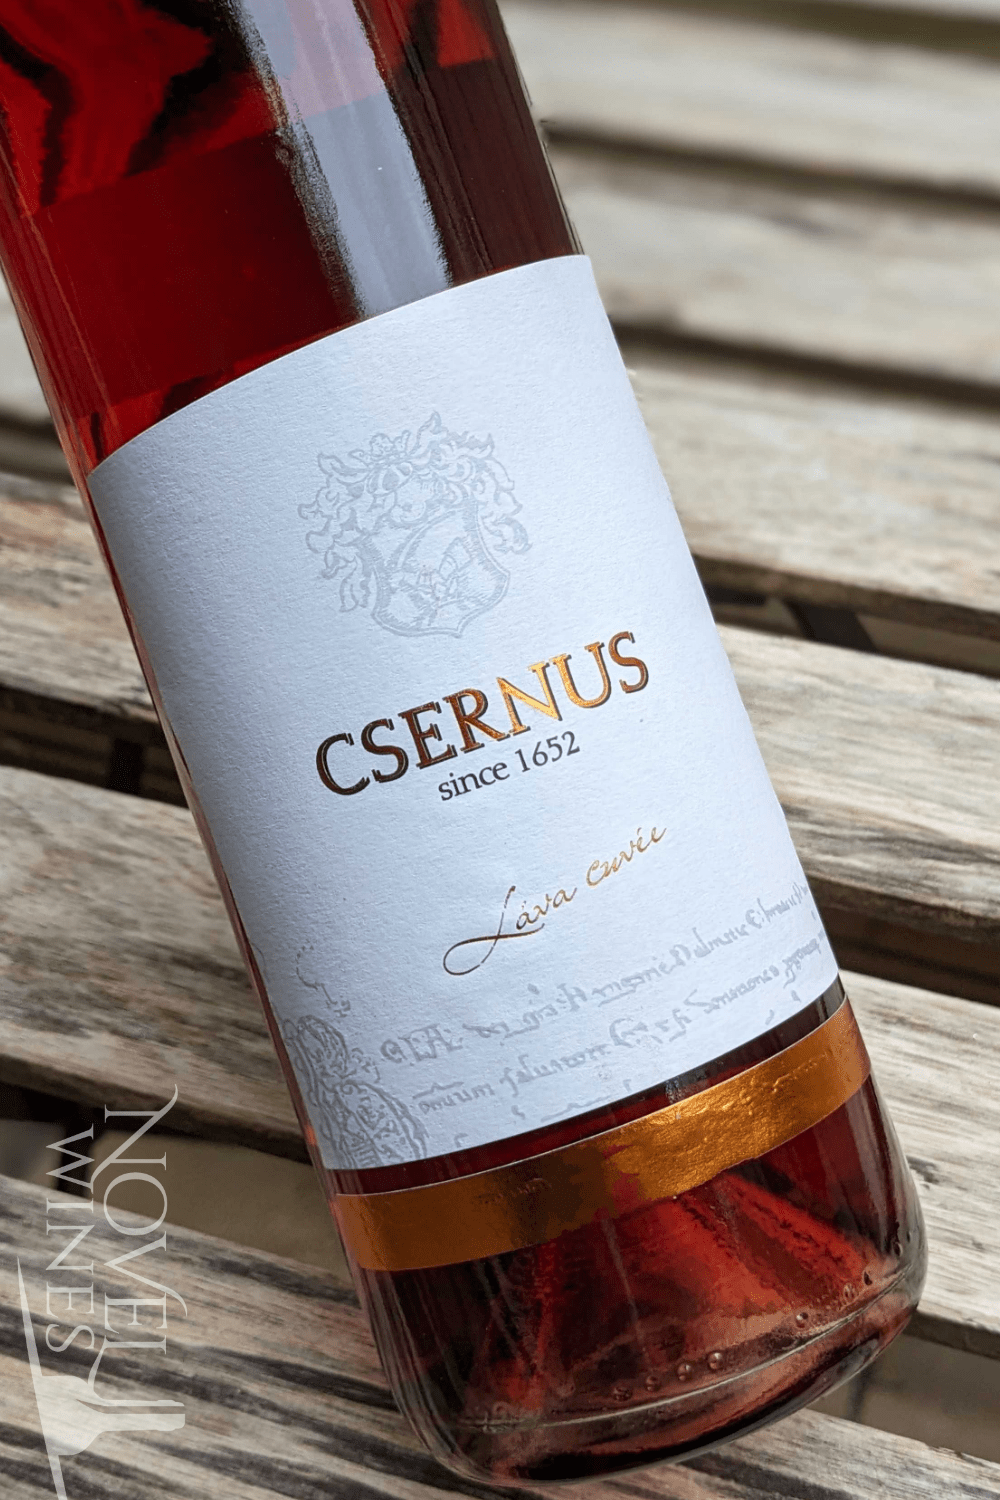 Csernus Rose Wine Csernus Lava Cuvée Siller Rosé 2021, Slovakia